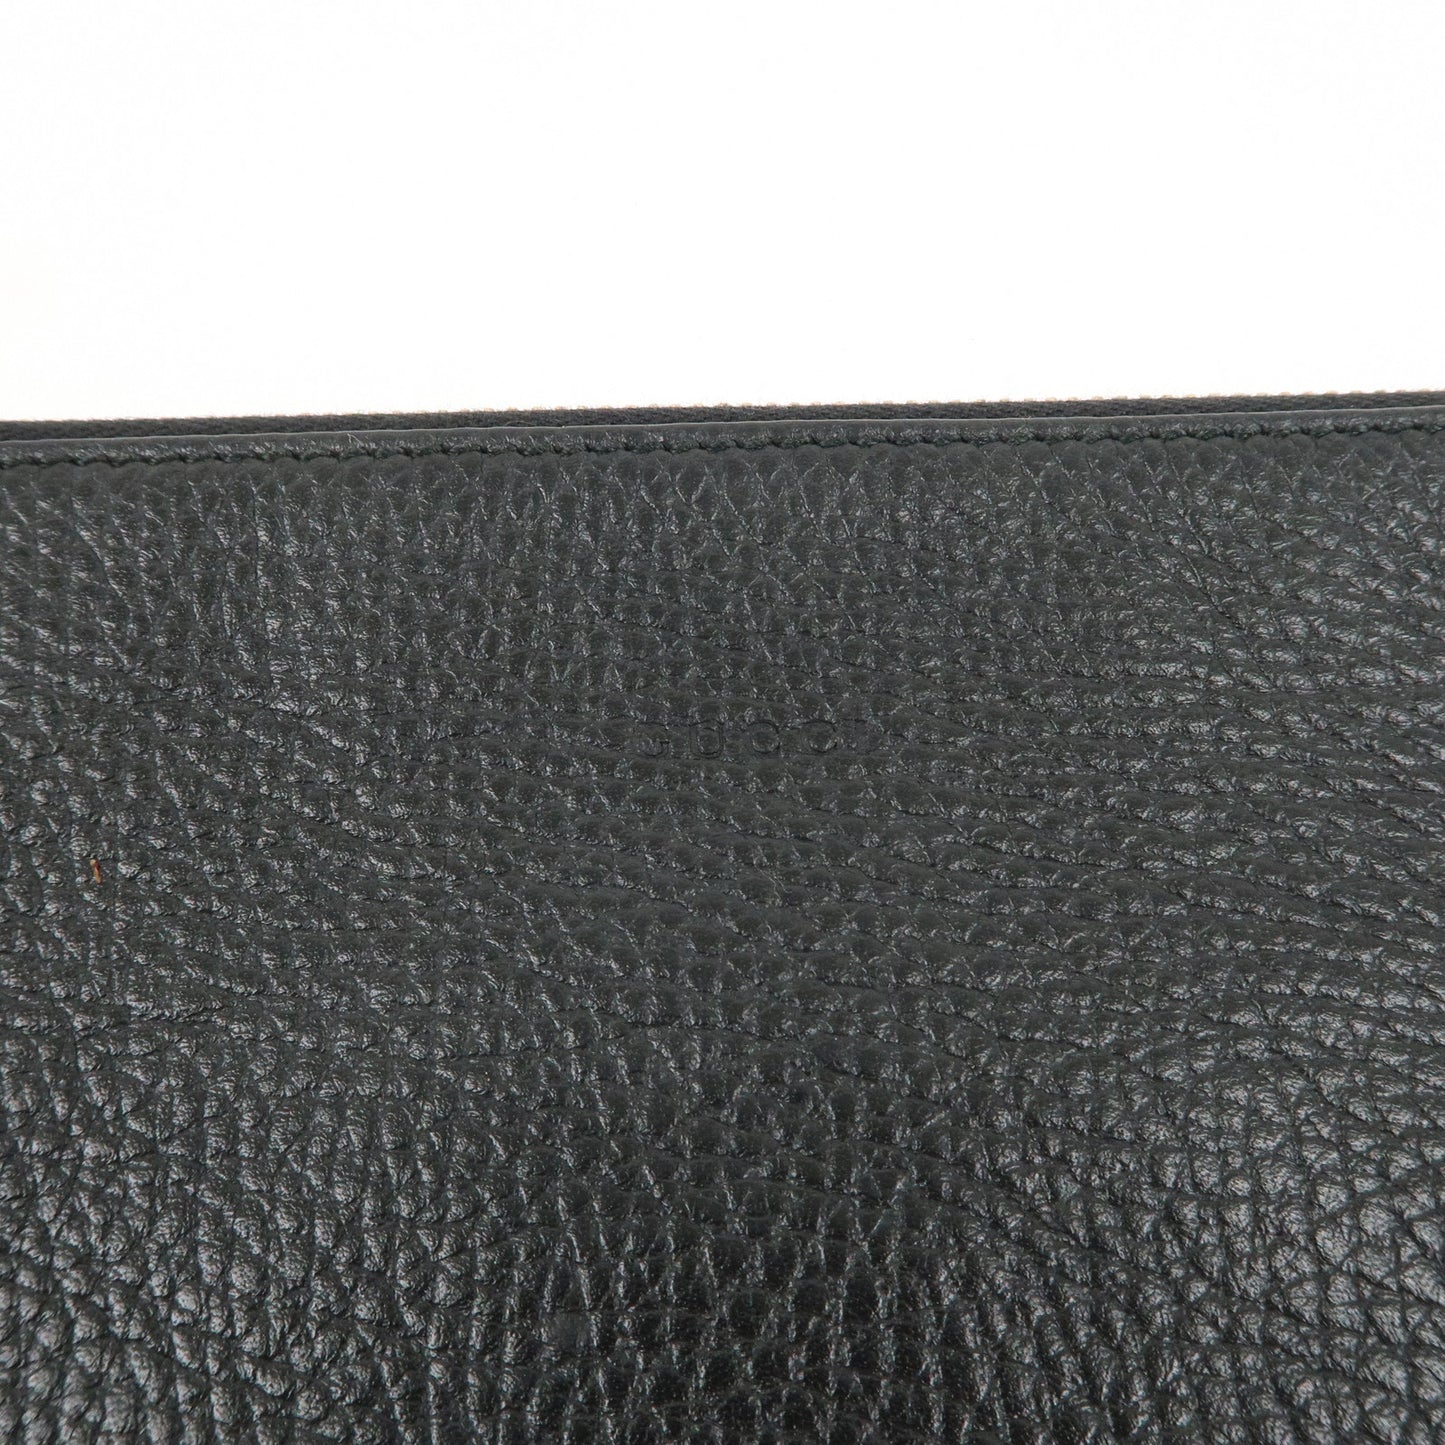 GUCCI Bamboo Leather Clutch Bag Black 449653